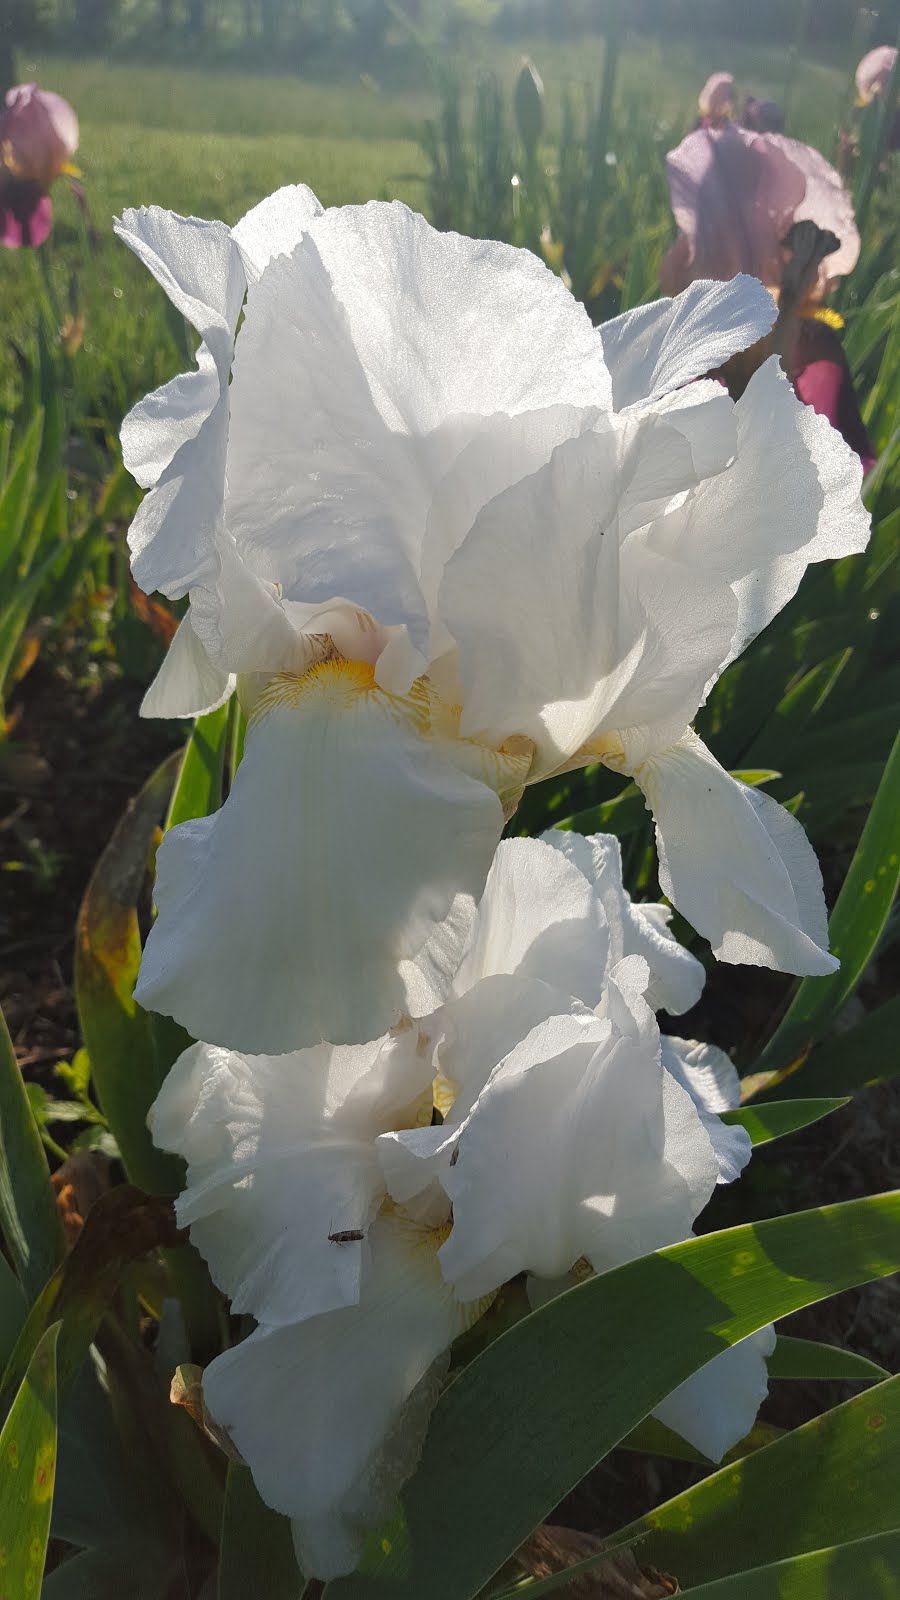 Iris Plants for Sale